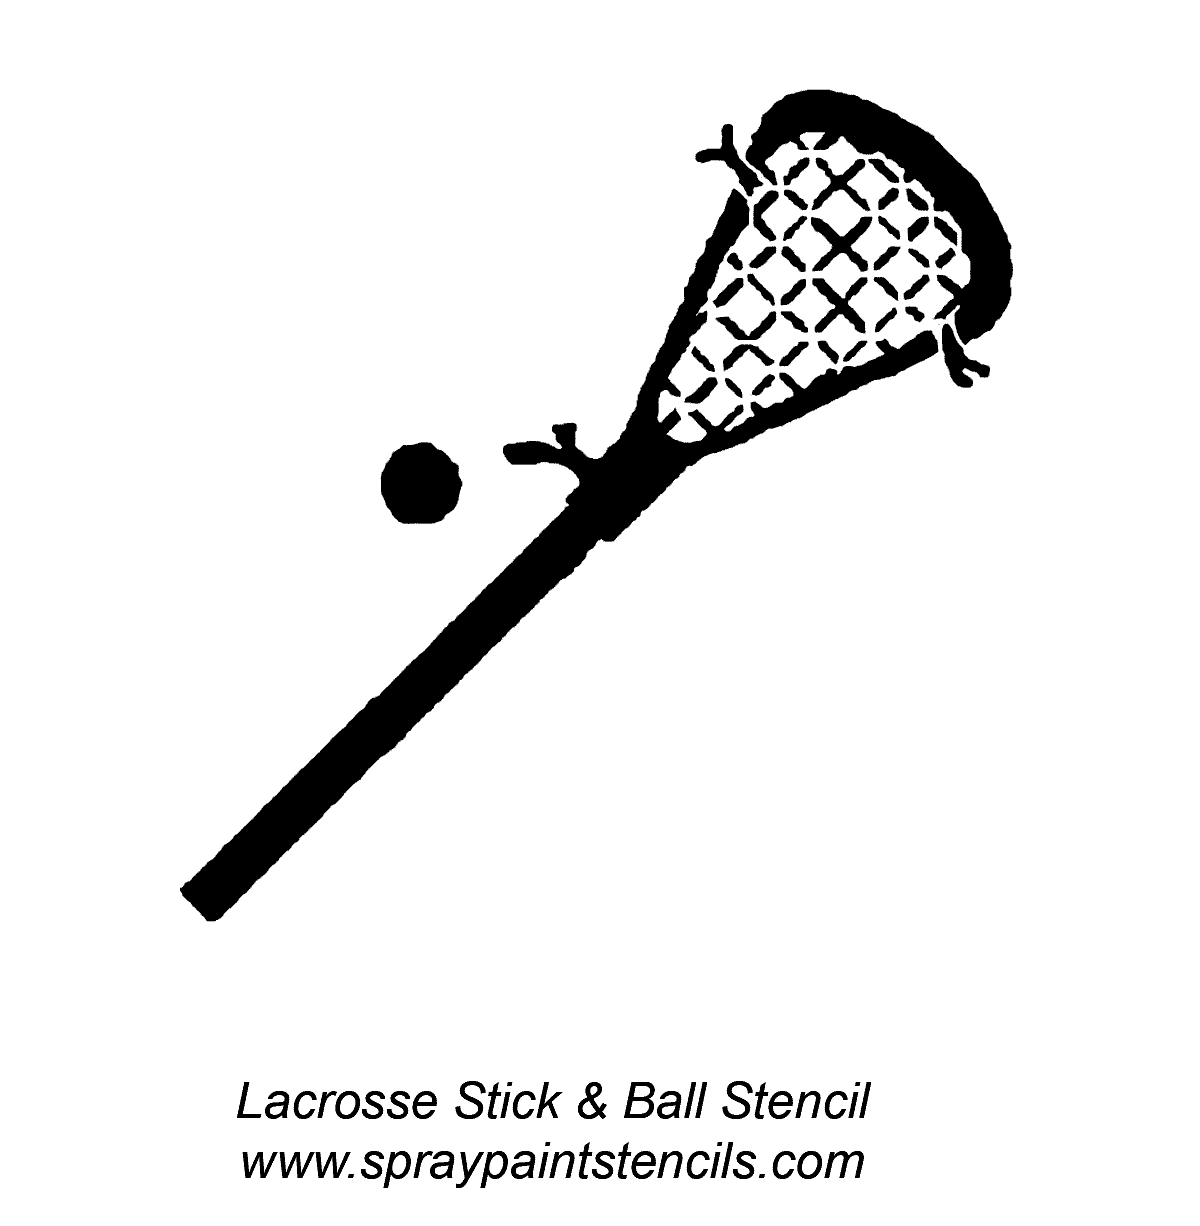 Free lacrosse clipart lacross - Lacrosse Sticks Clipart